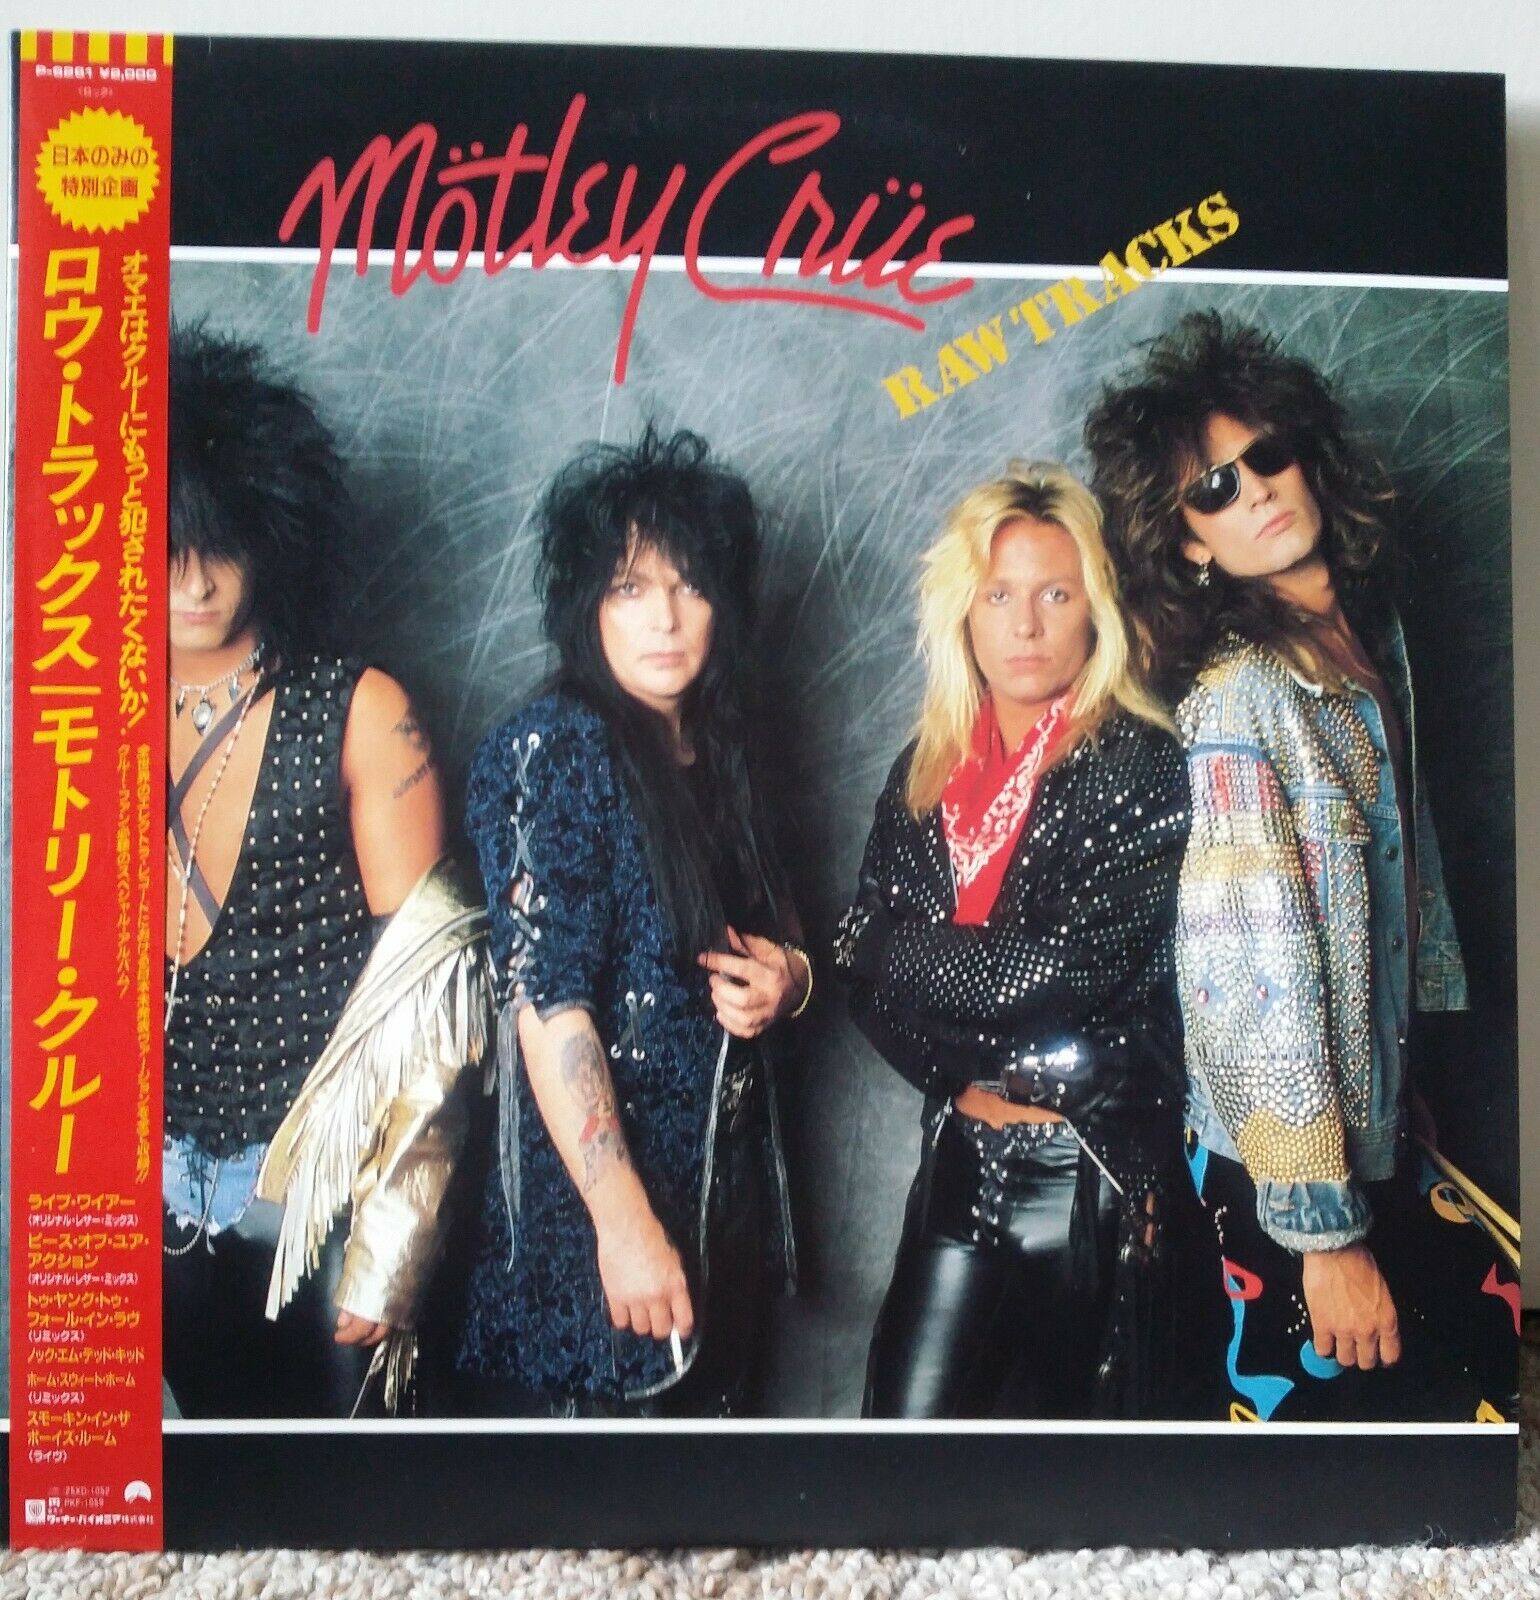 popsike.com - MOTLEY CRUE Raw Tracks 1988 LP Japan OBI Glam Hair 